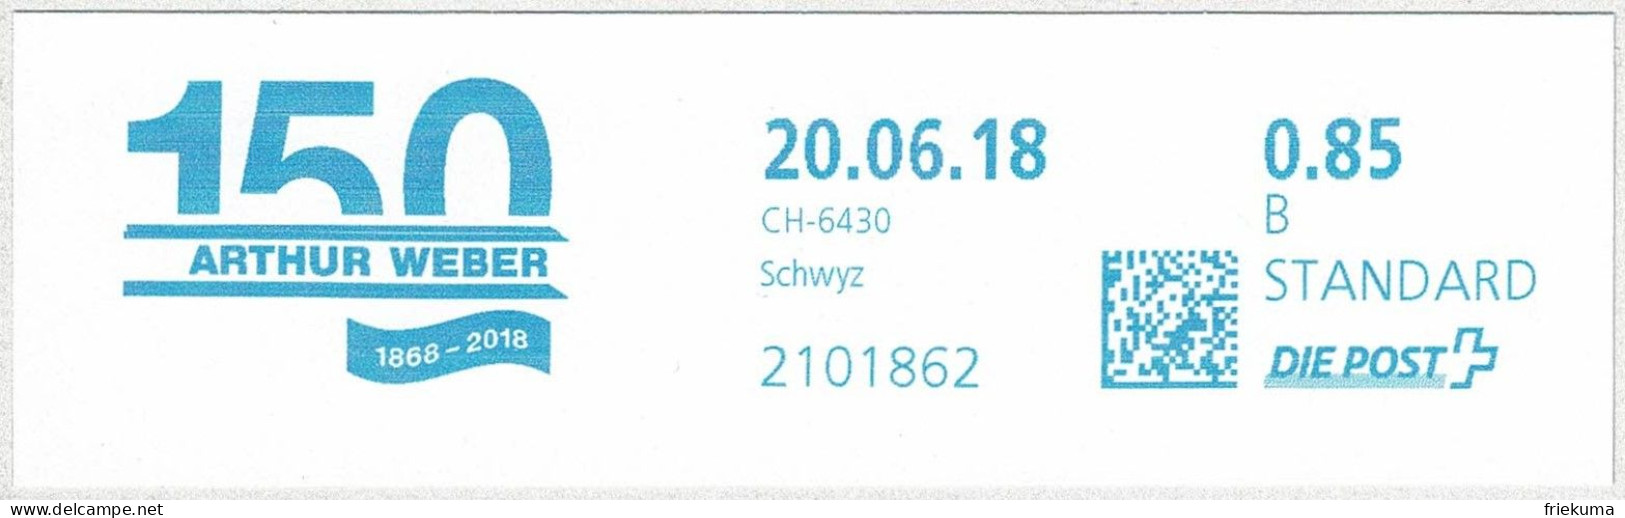 Schweiz / Helvetia 2018, Freistempel / EMA / Meterstamp Arthur Weber Schwyz, Handwerkerzentrum - Frankiermaschinen (FraMA)